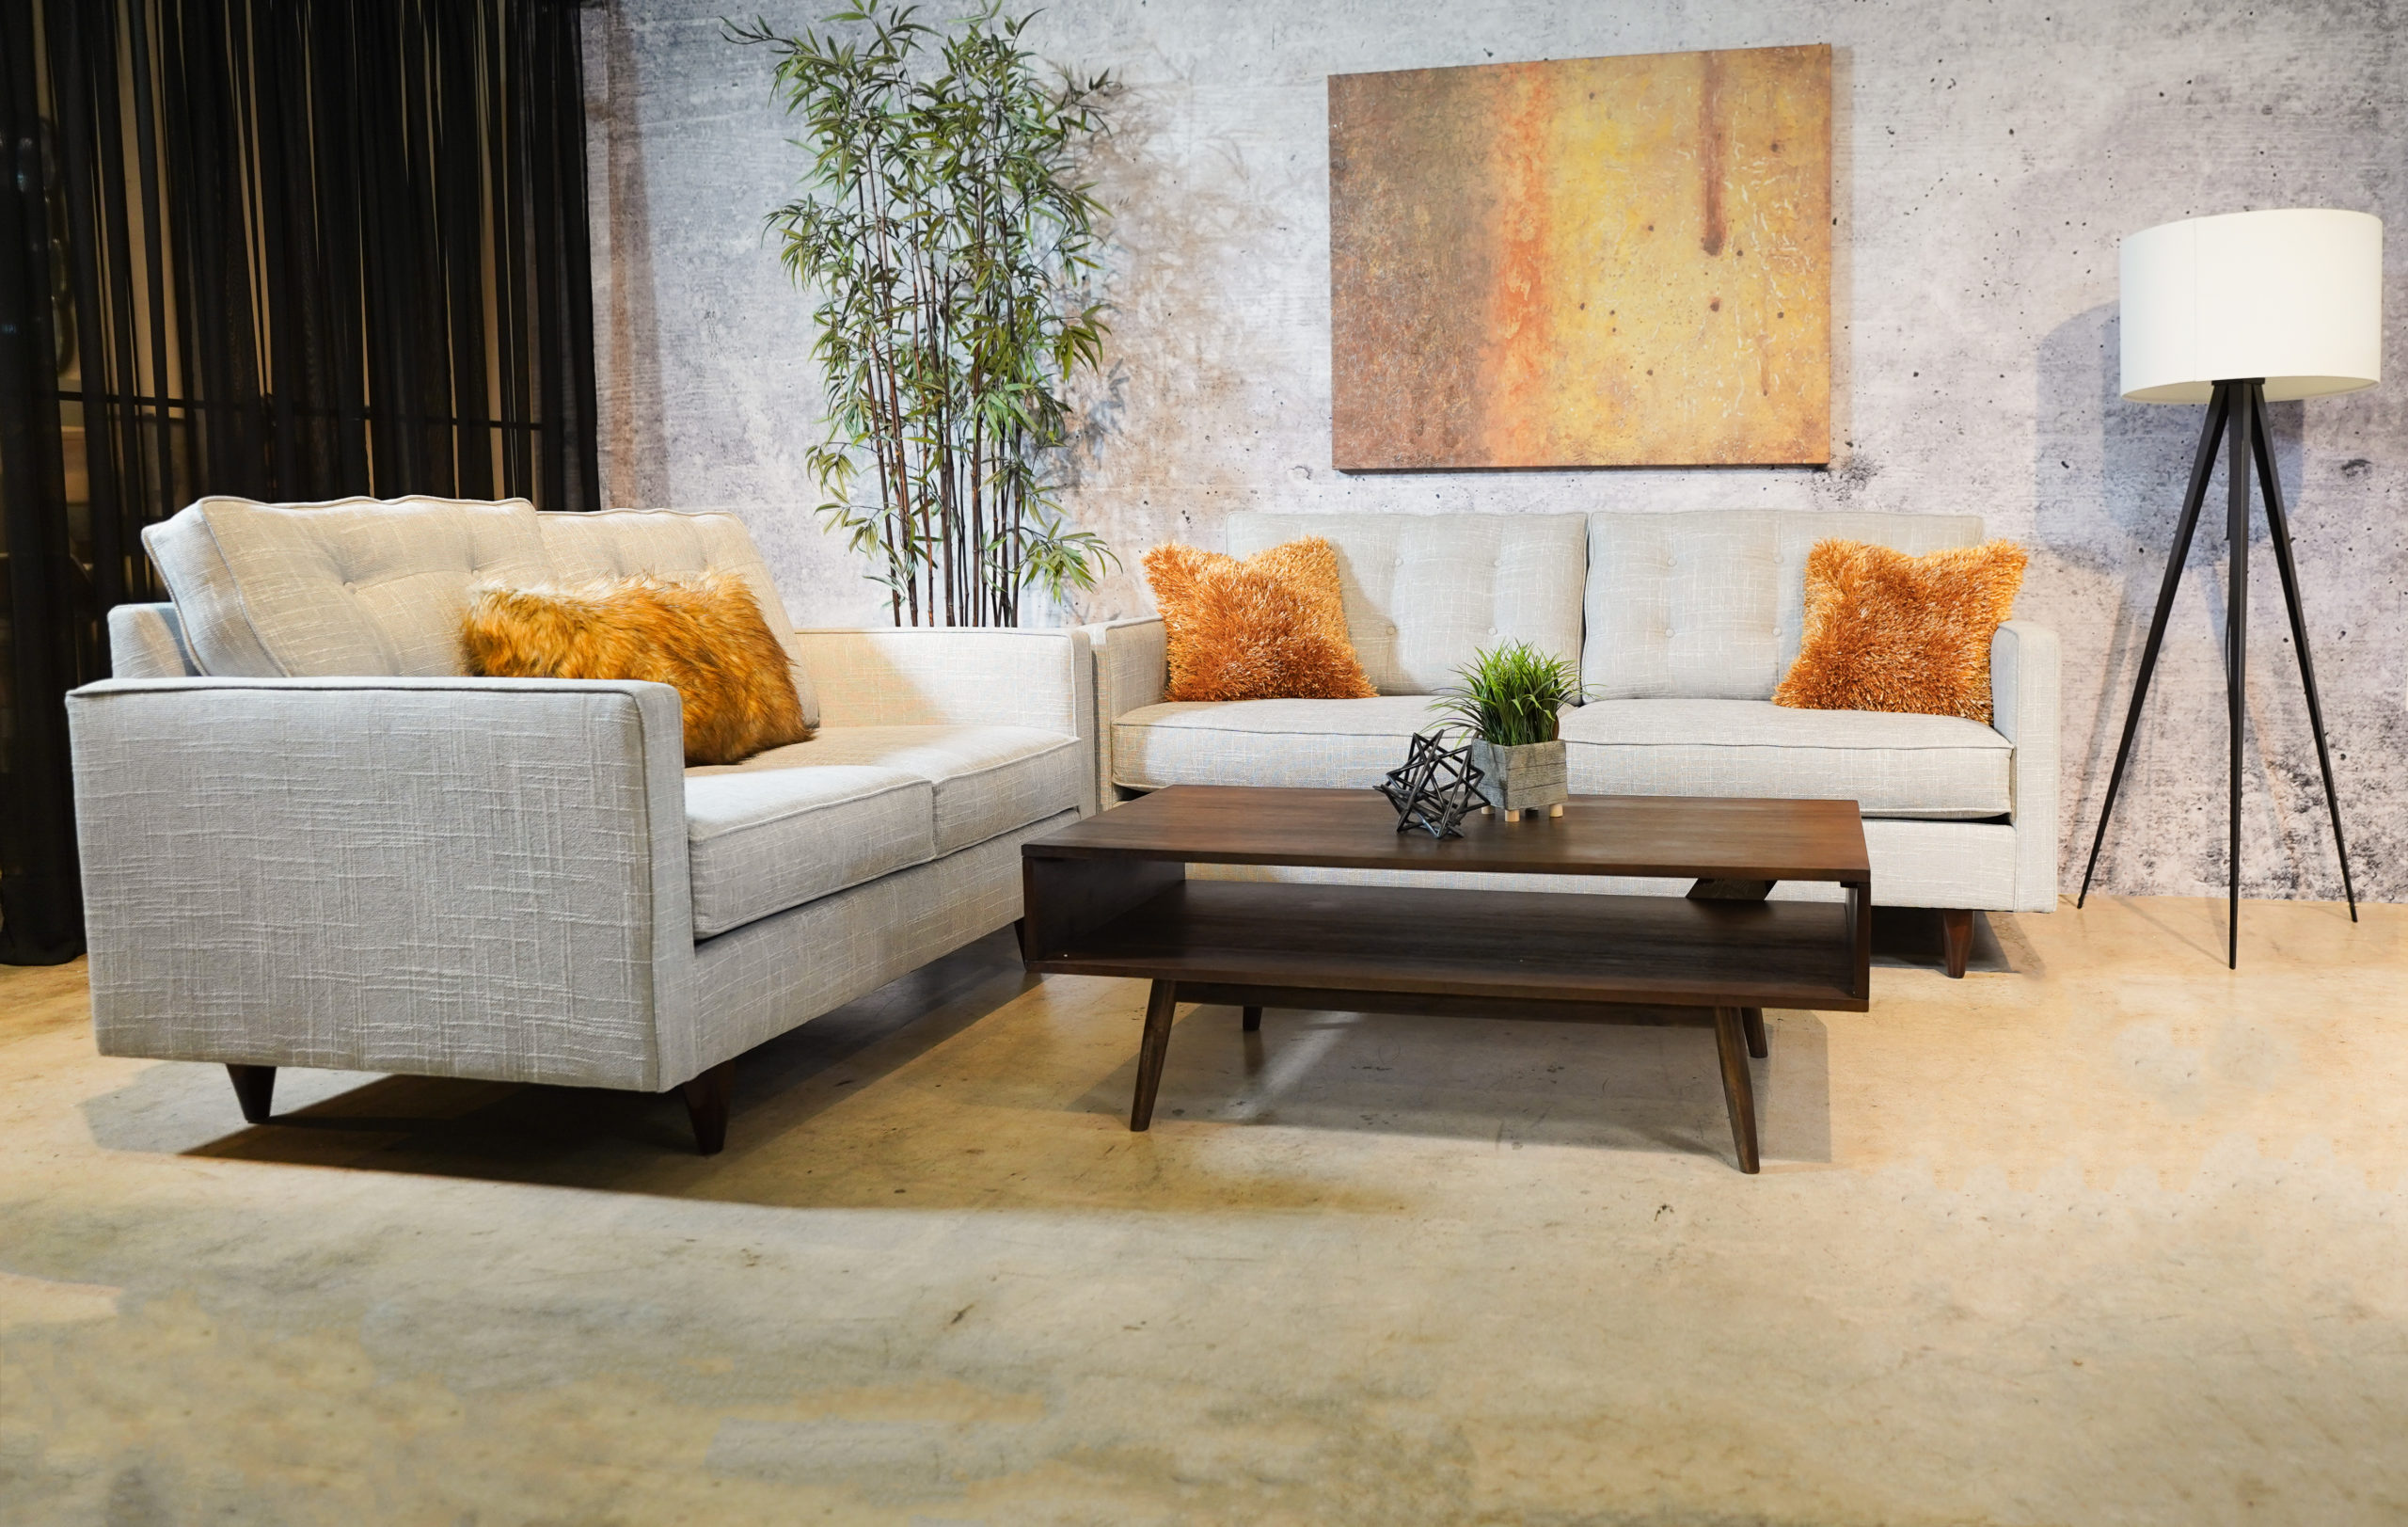 Custom cream and orange sofa set